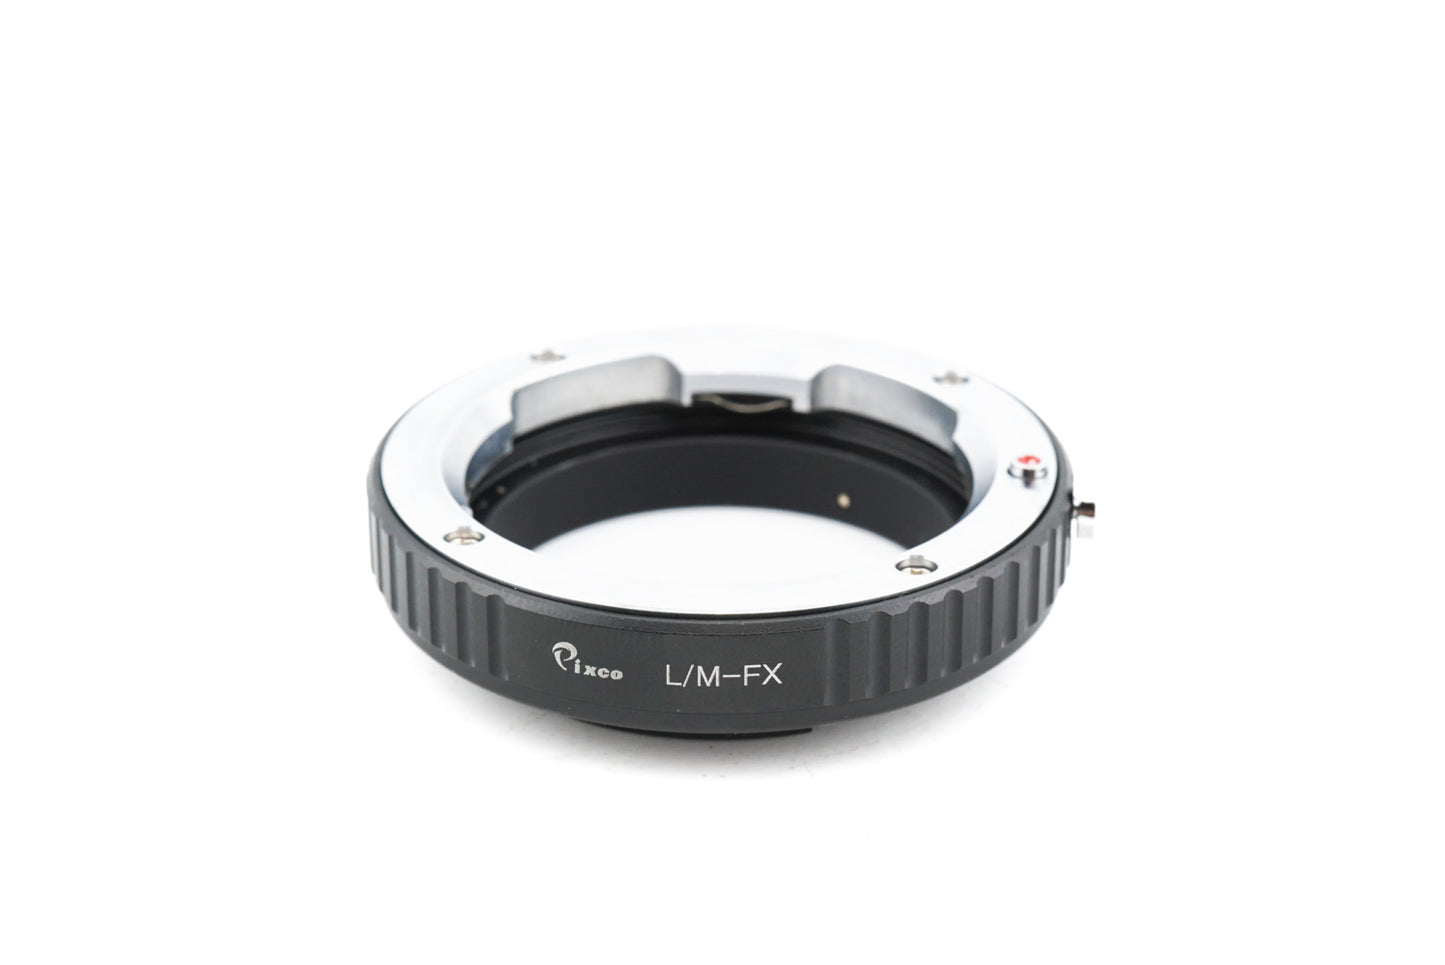 Pixco Leica M - Fuji X Adapter (L/M-FX) - Lens Adapter